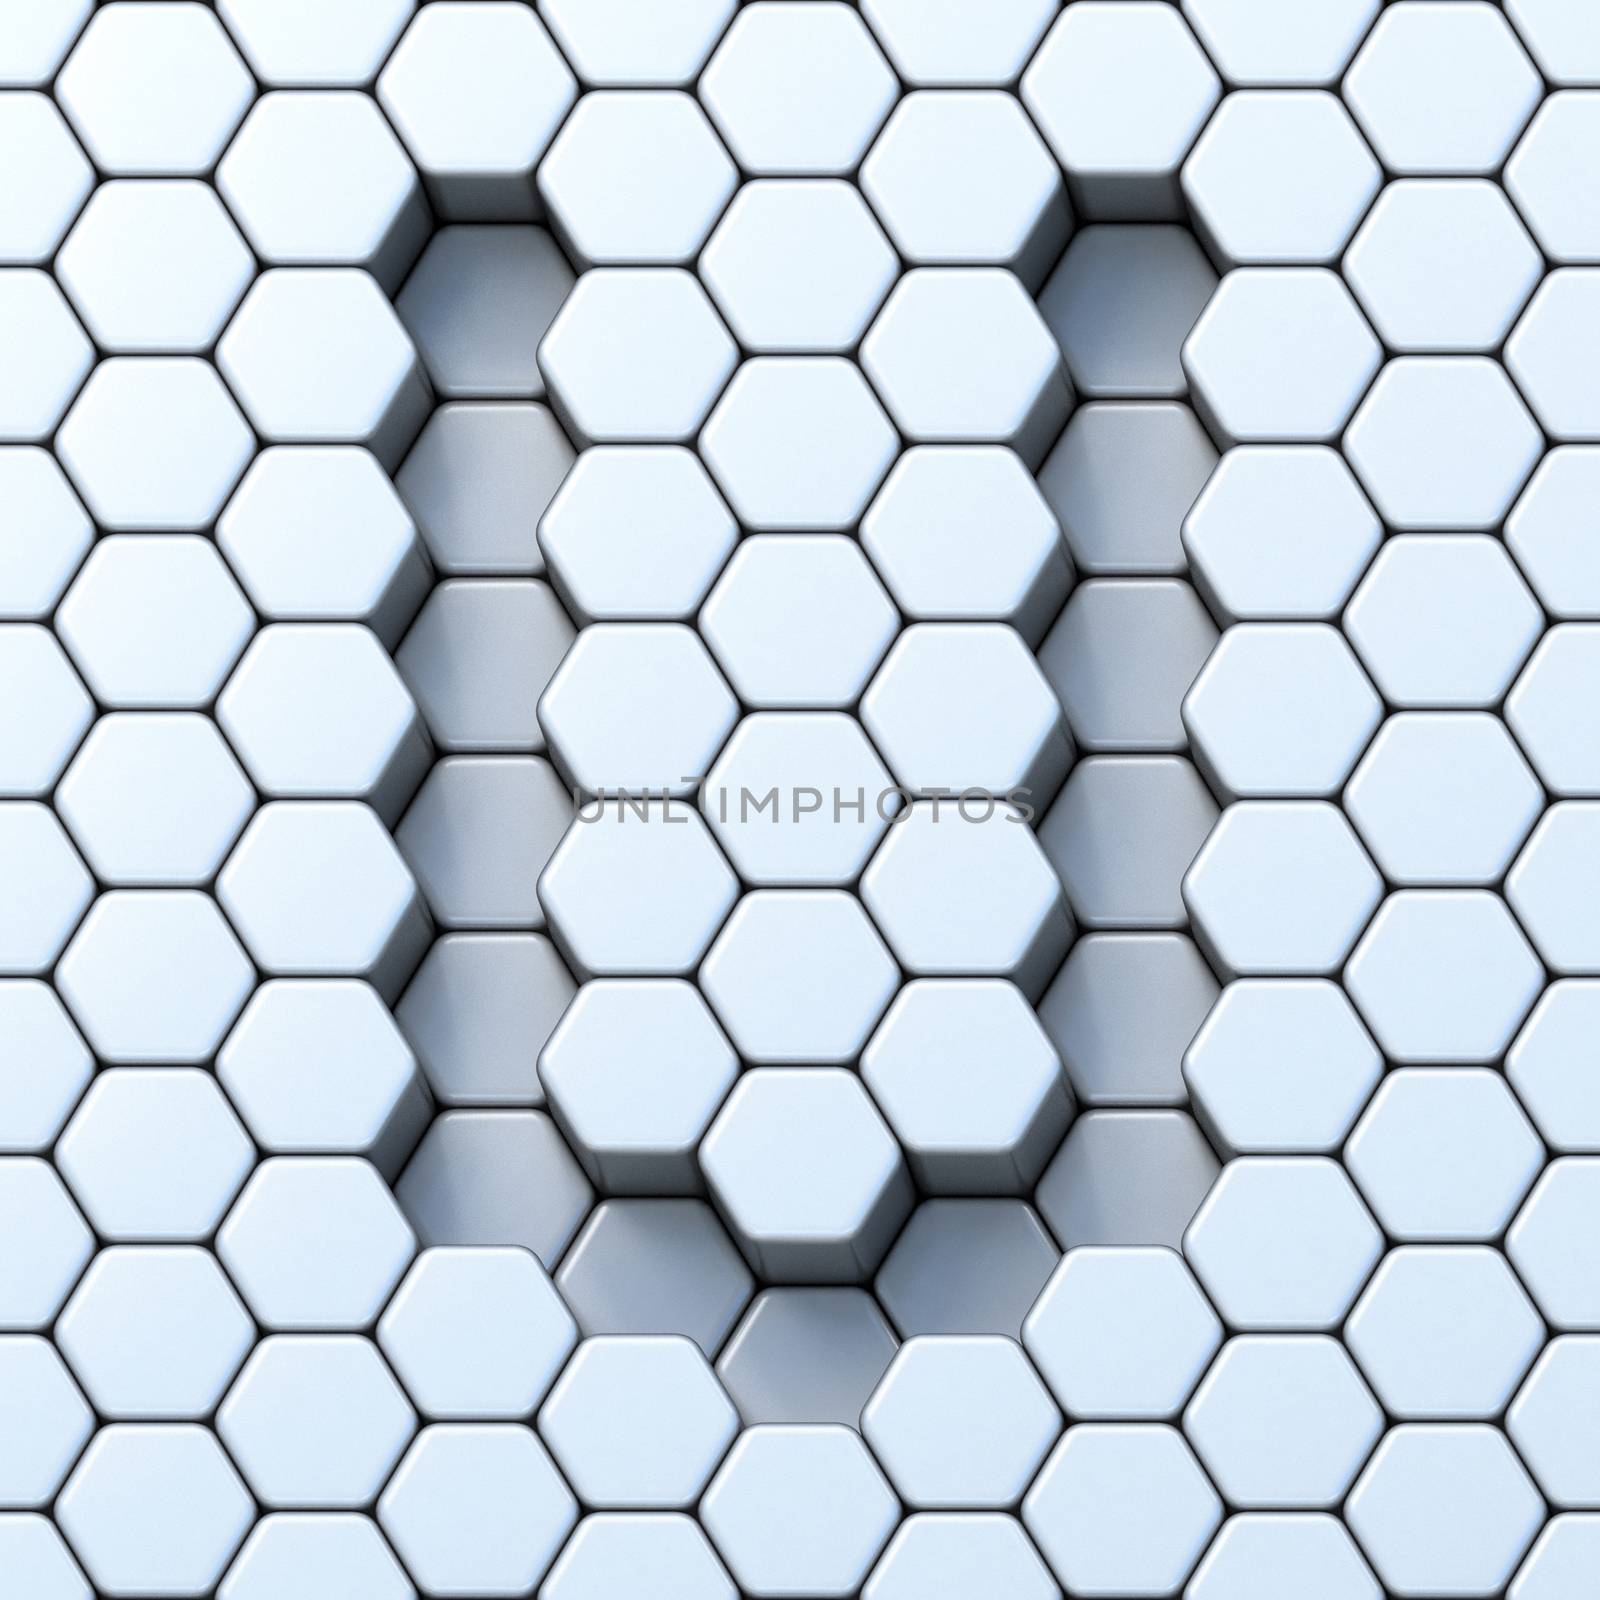 Hexagonal grid letter U 3D render illustration